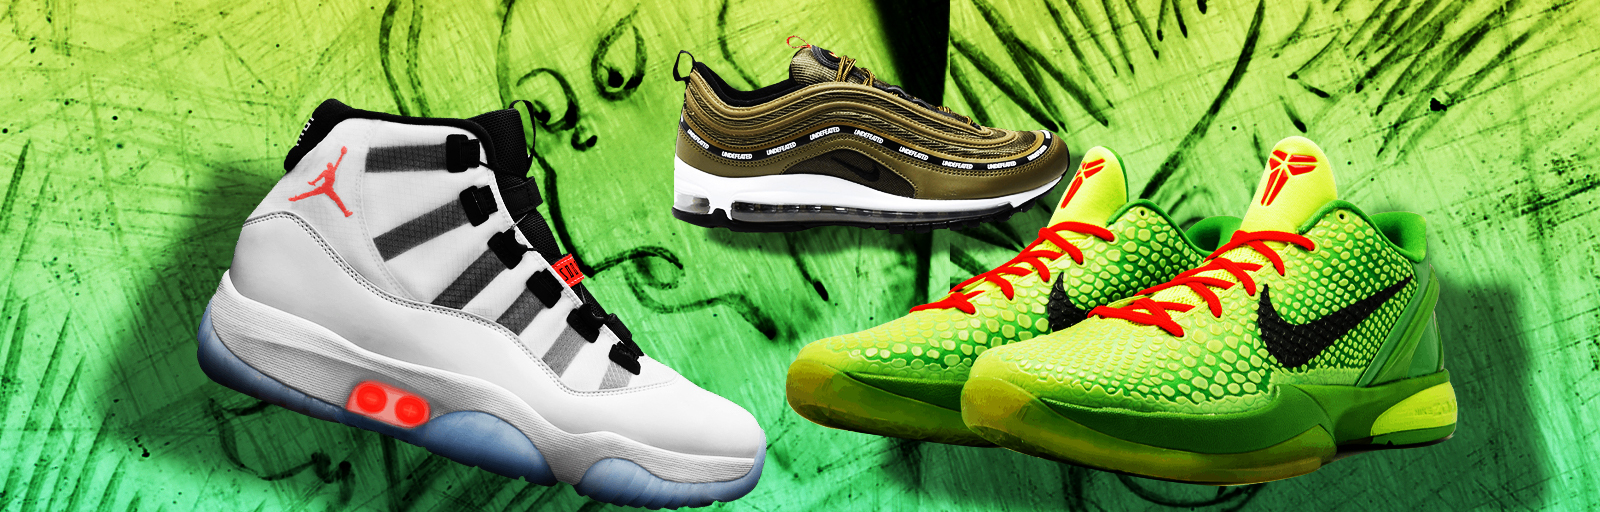 Beweging Bomen planten onwetendheid Where To Buy The Air Jordan 11 Adapt, Nike Kobe 6 Grinch And More